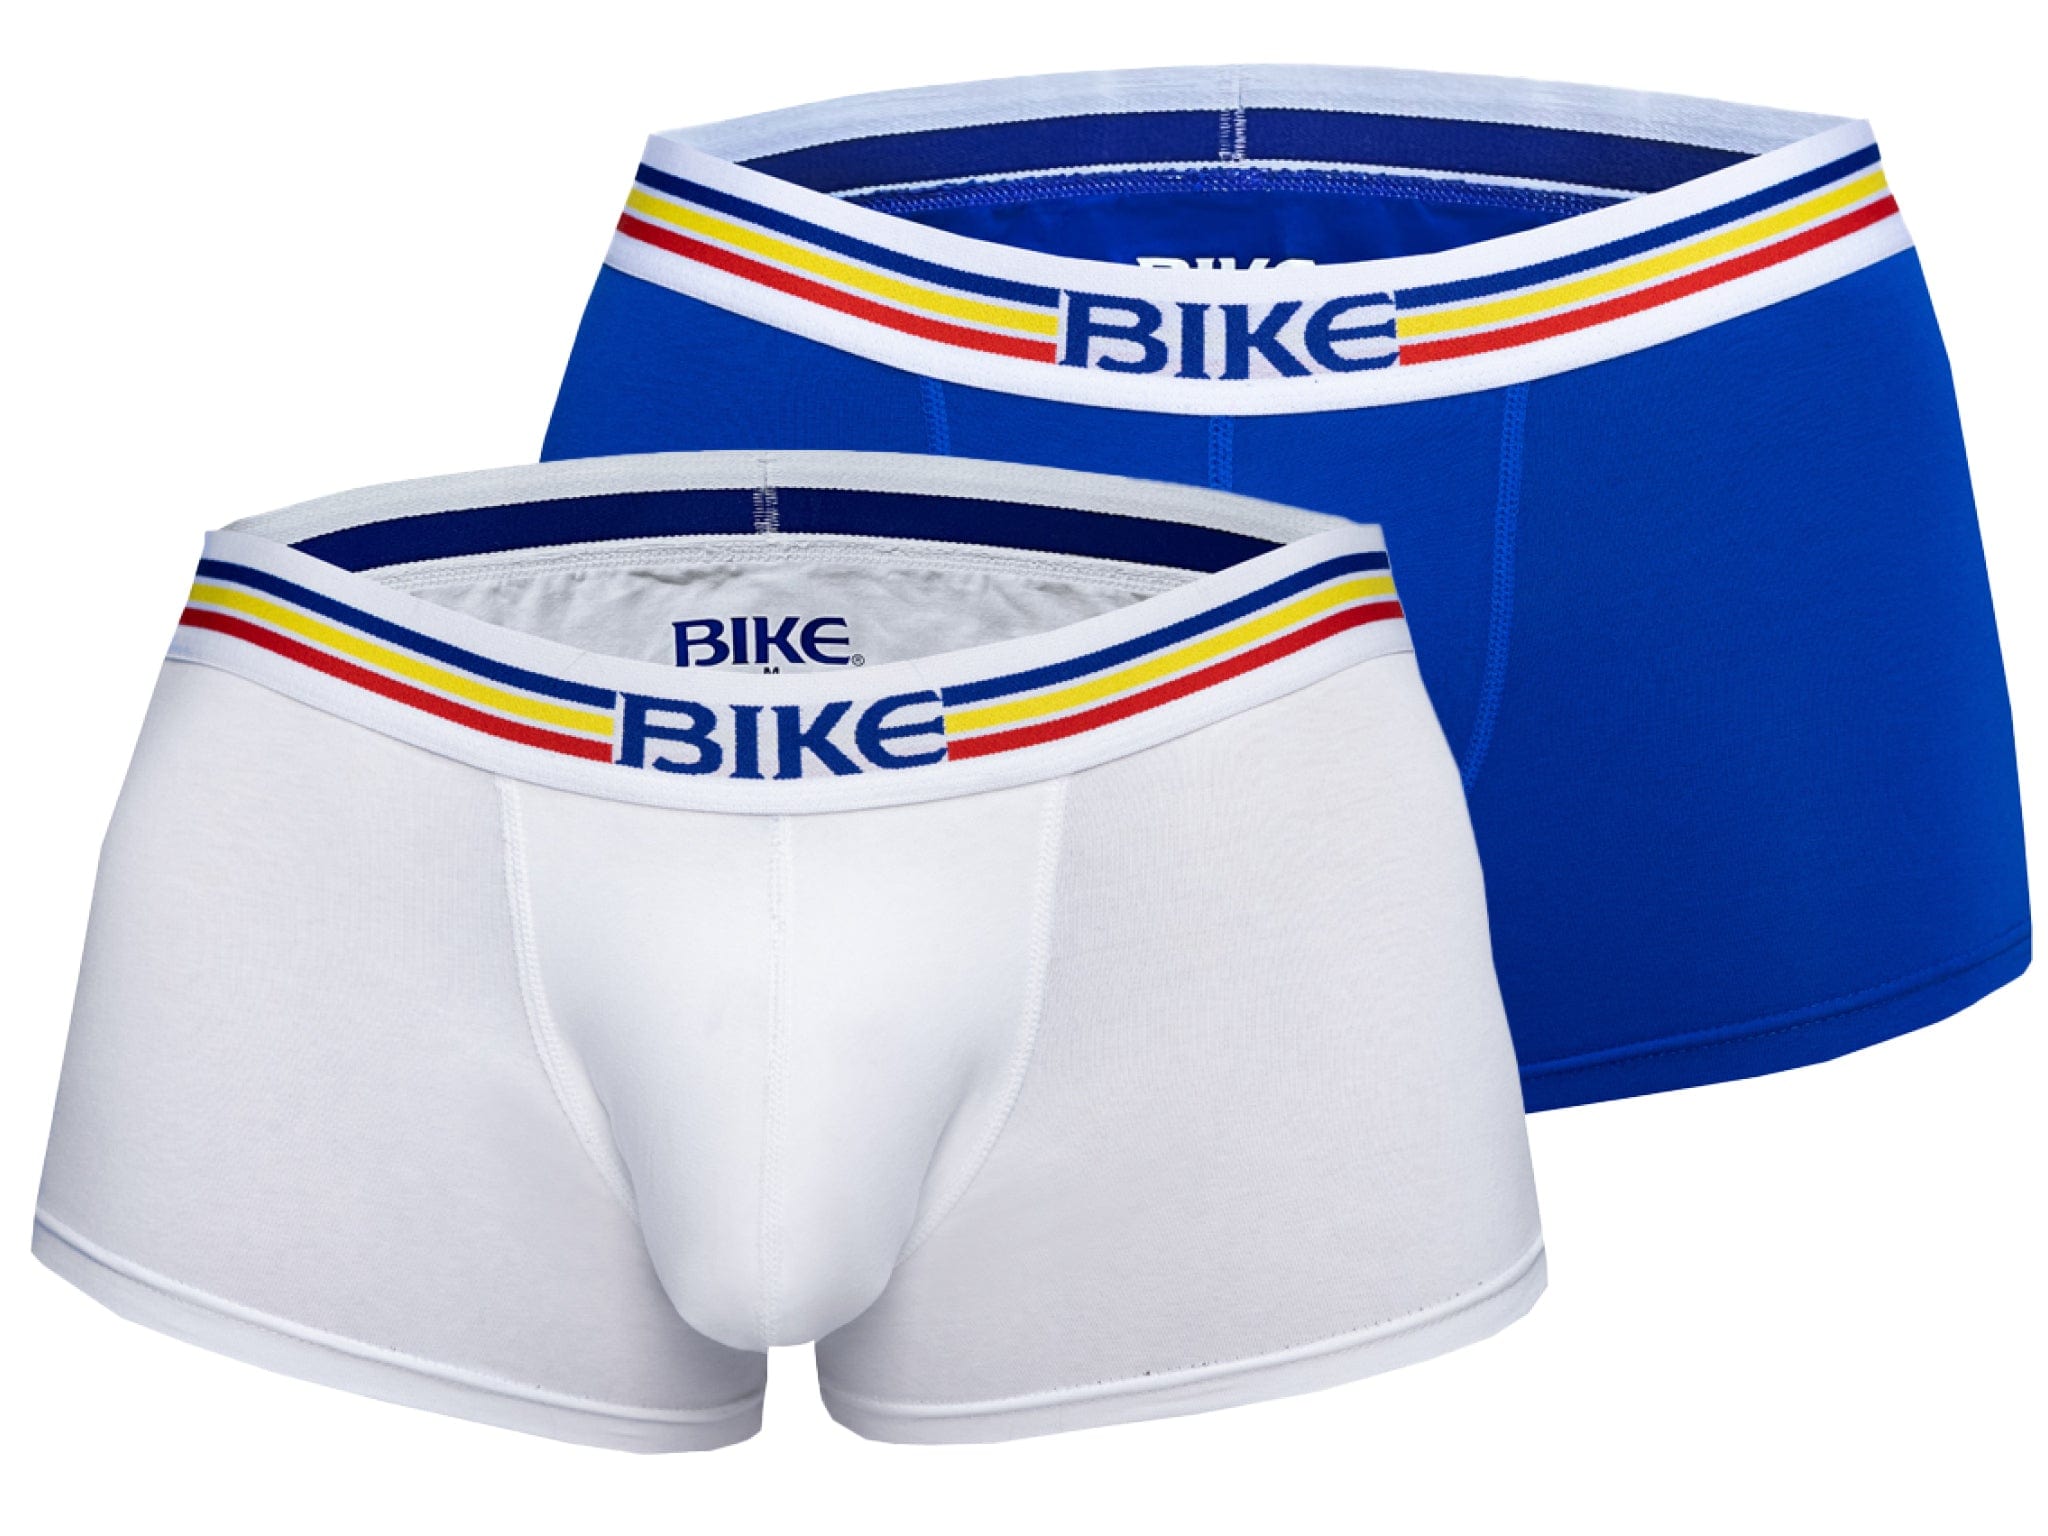 Men's Athletic Underwear